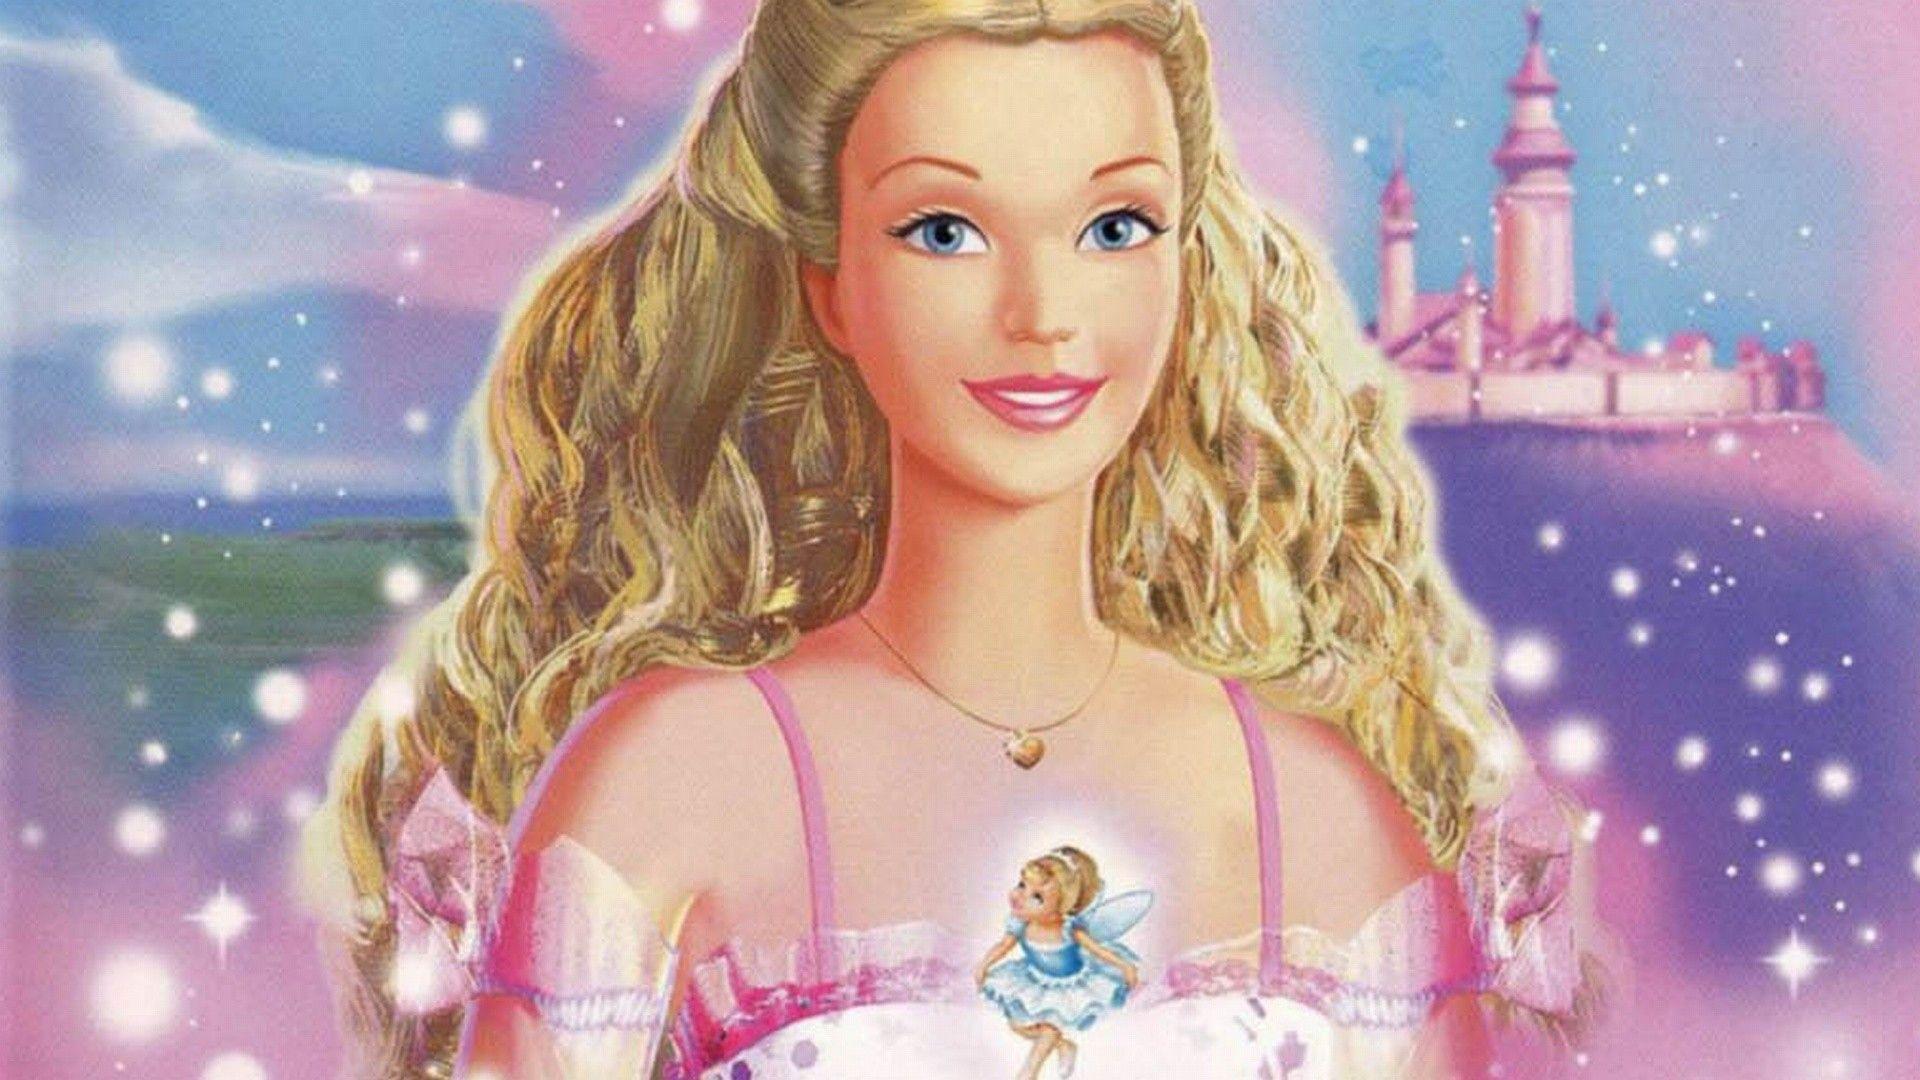 Barbie in The Nutcracker Princess Movies Wallpaper 1920x1080PX